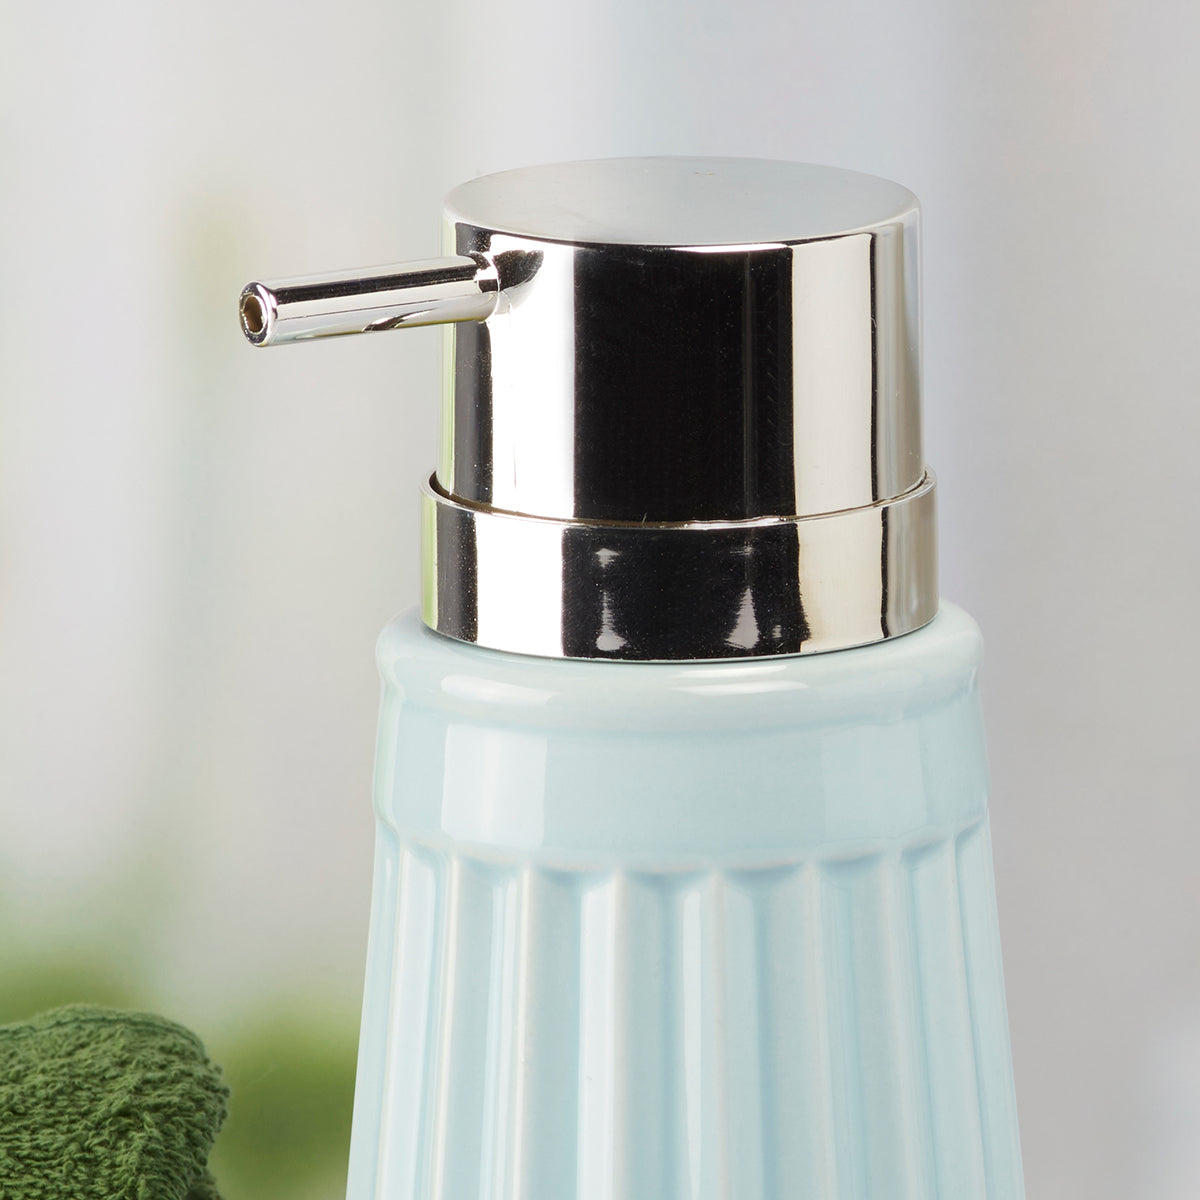 Ceramic Soap Dispenser Pump for Bathroom for Bath Gel, Lotion, Shampoo (7980)